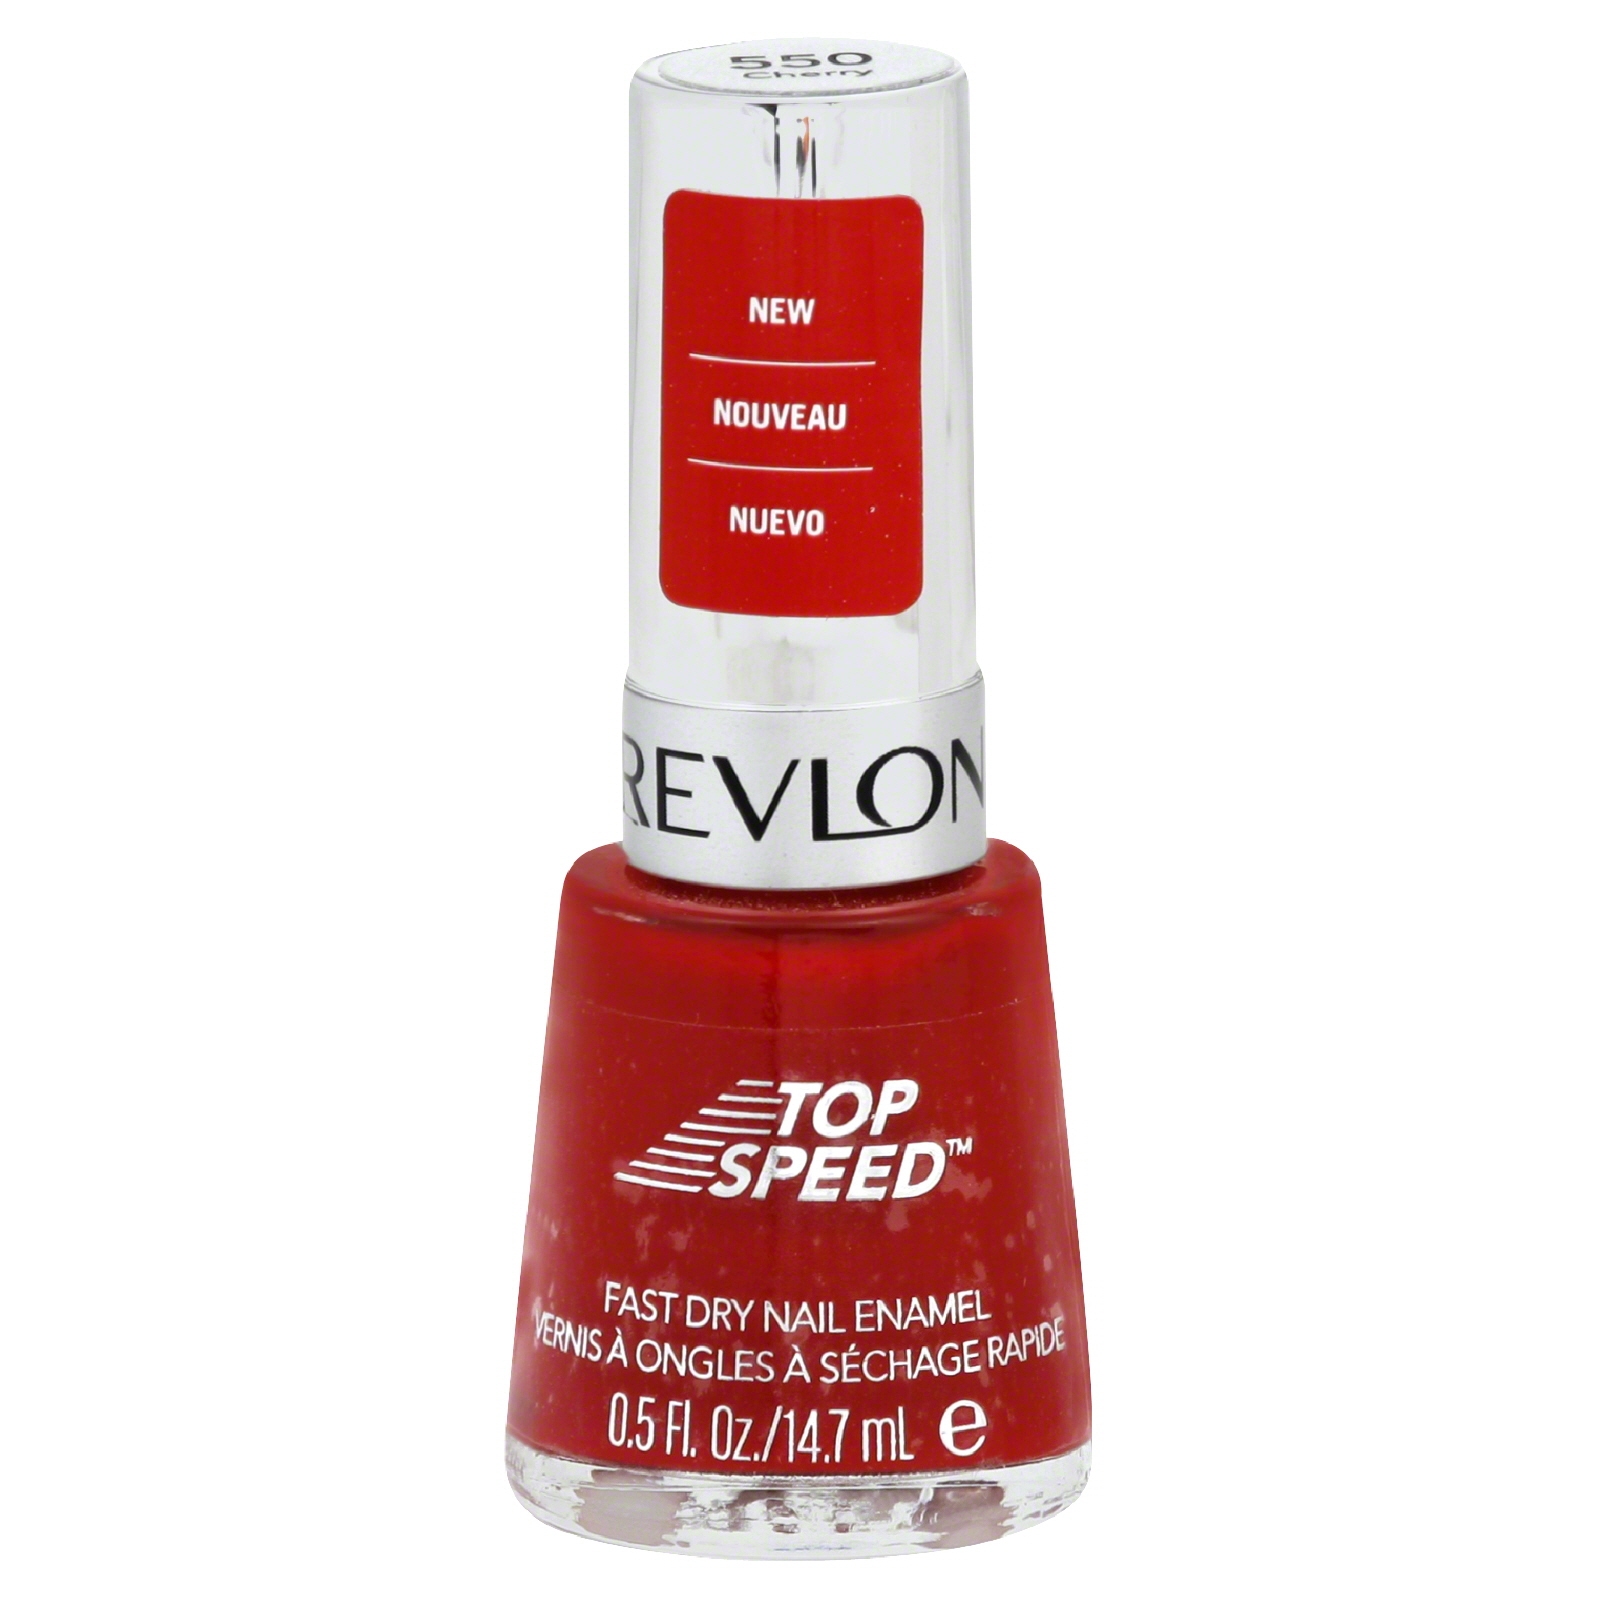 Top Speed Nail Enamel, Fast Dry, Cherry 550, 0.5 fl oz (14.7 ml)